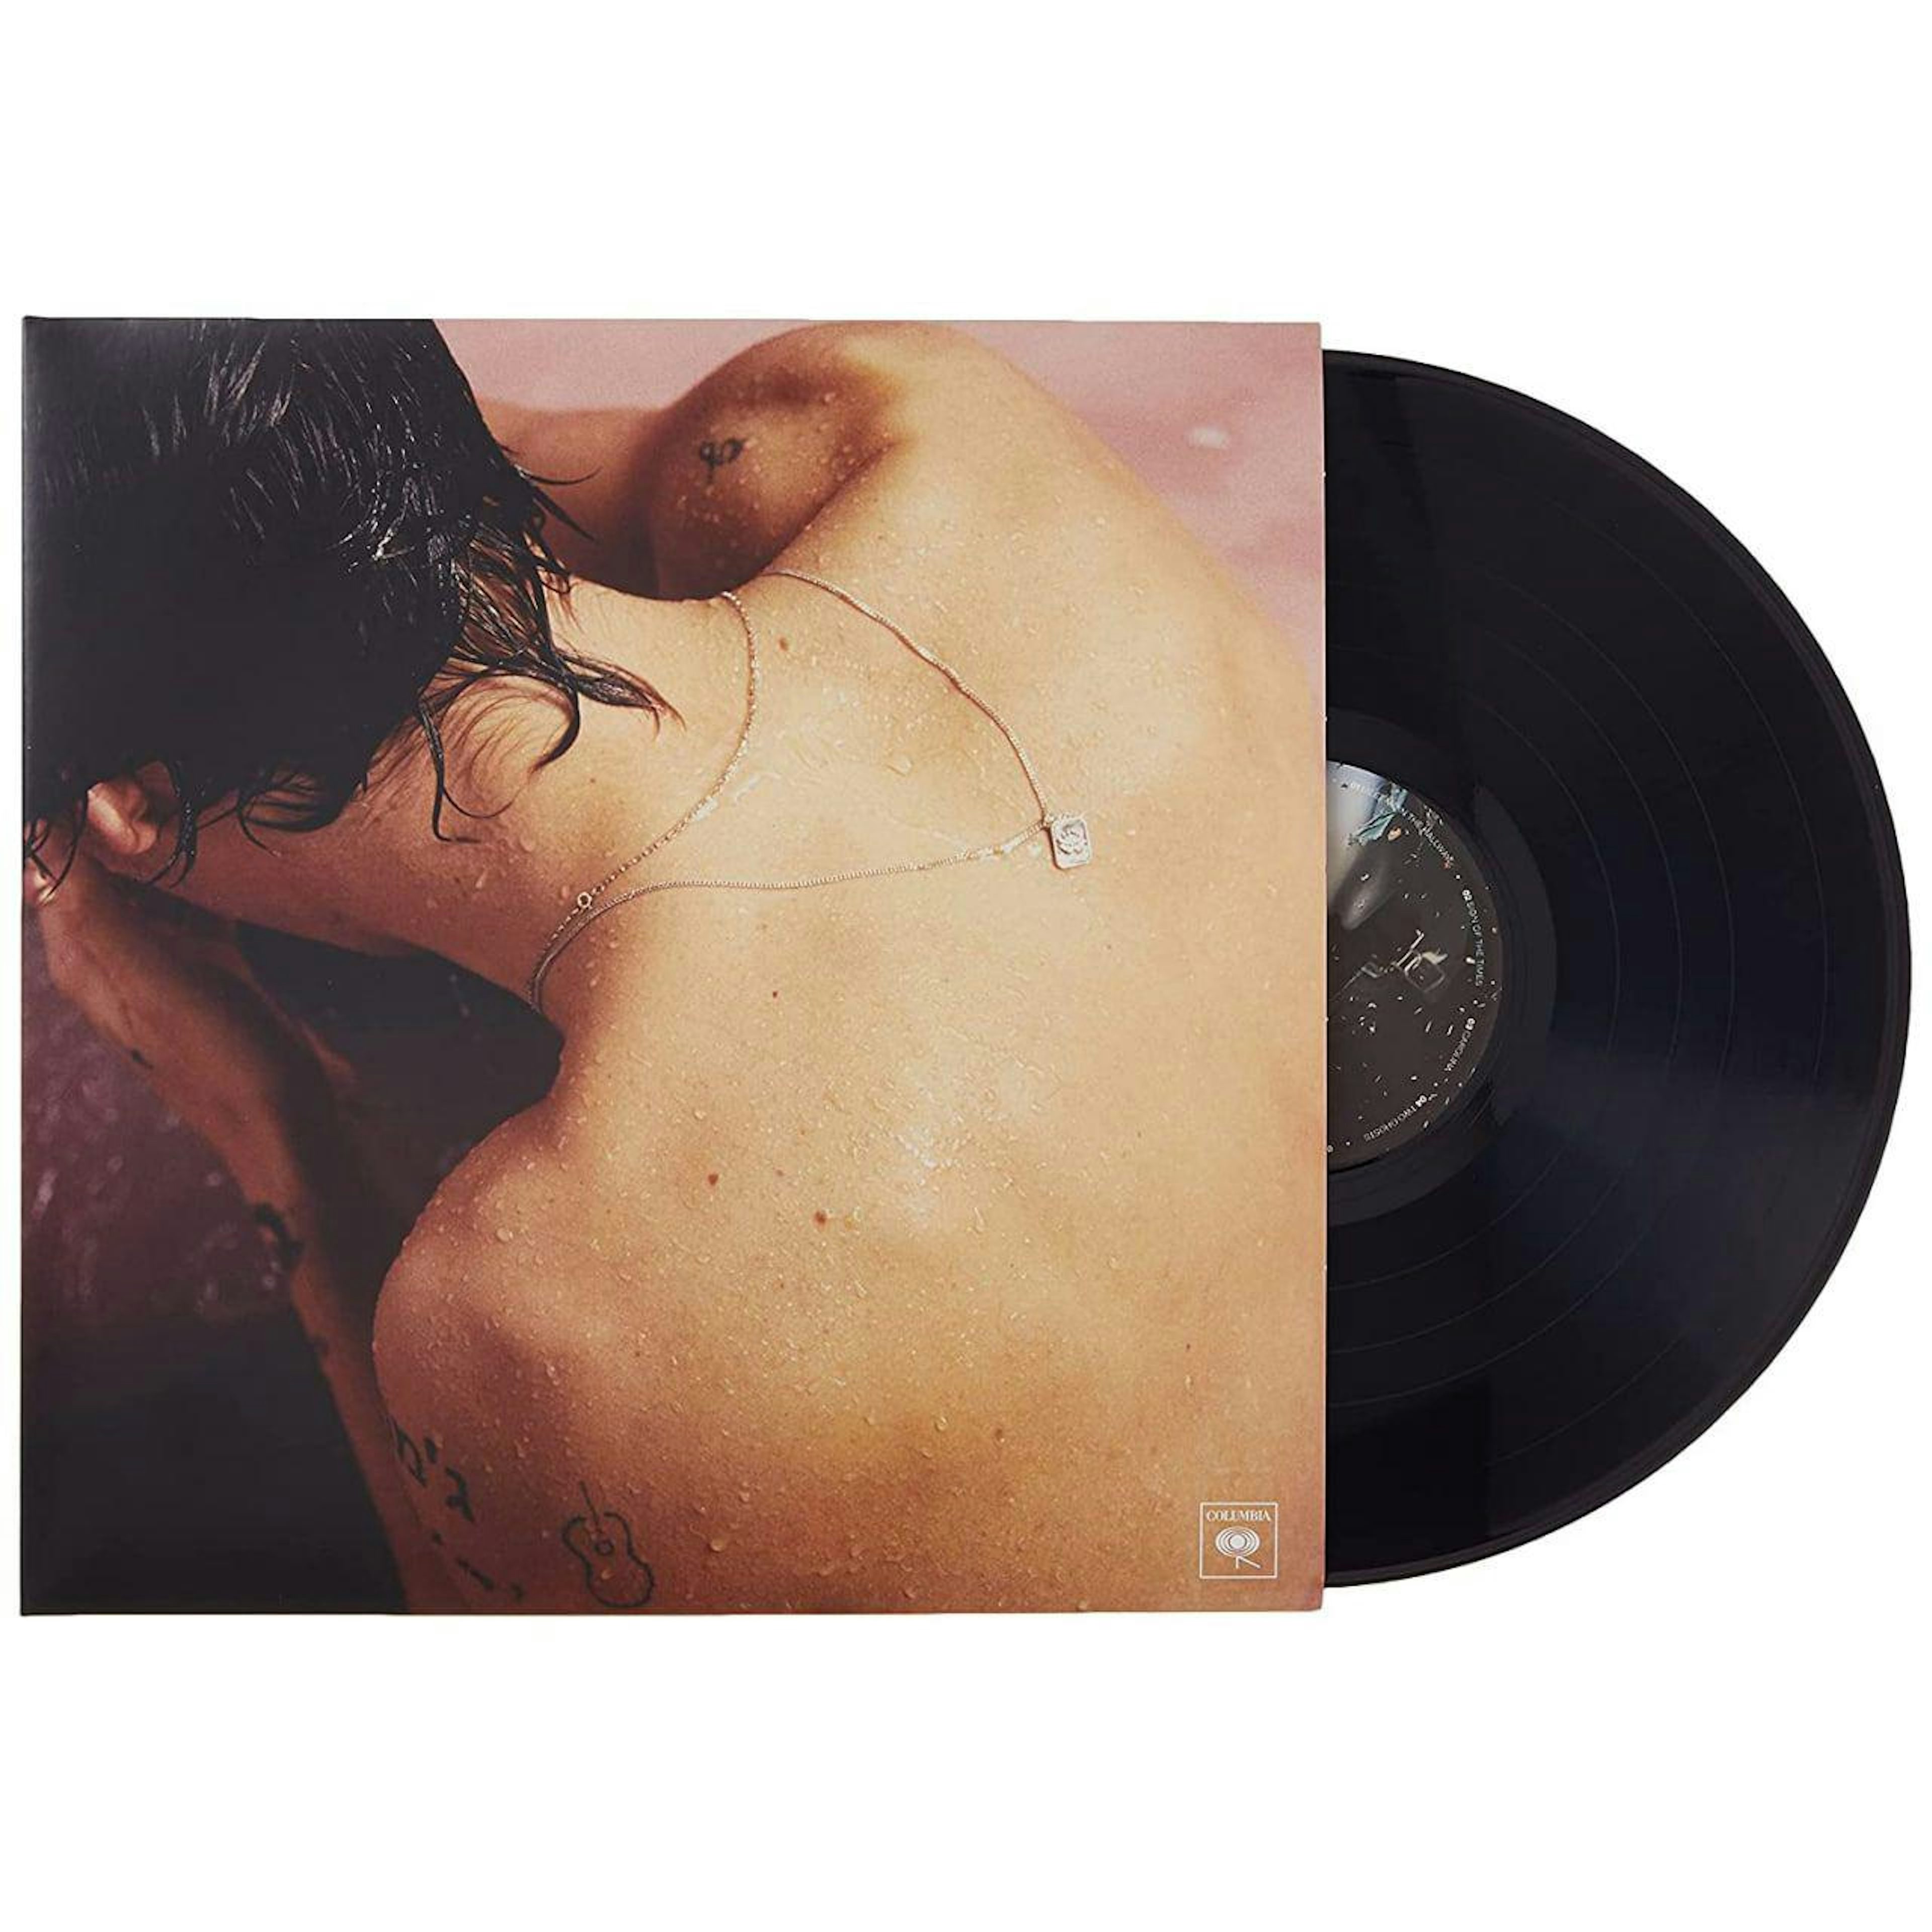 Styles LP - Harry Styles (Vinyl)